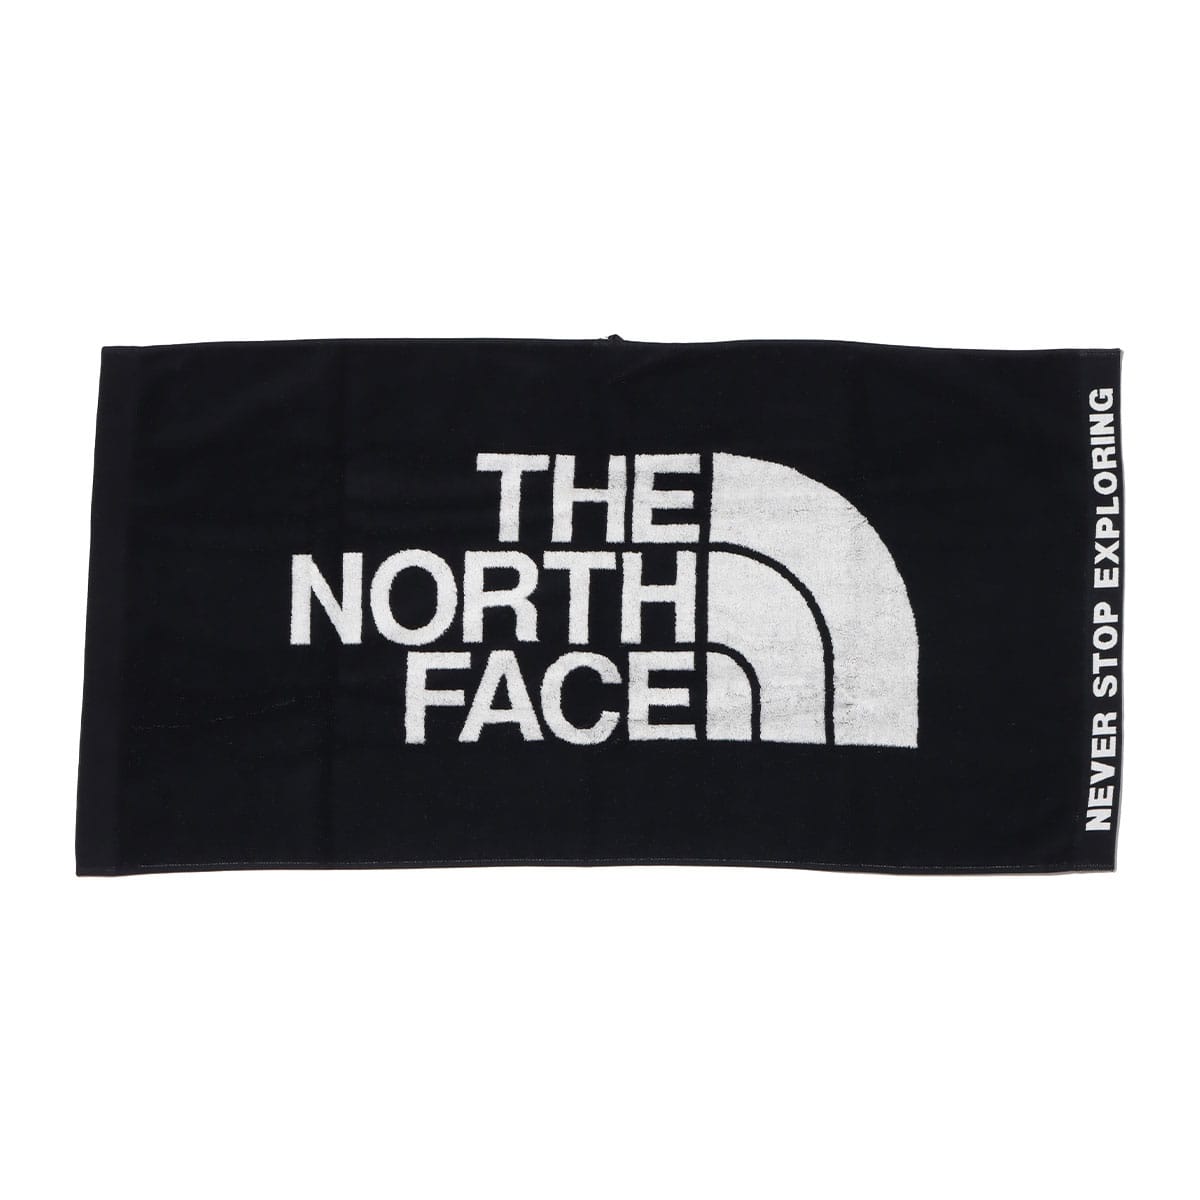 THE NORTH FACE COMFORT COTTON TOWEL L BLACK 22SS-I